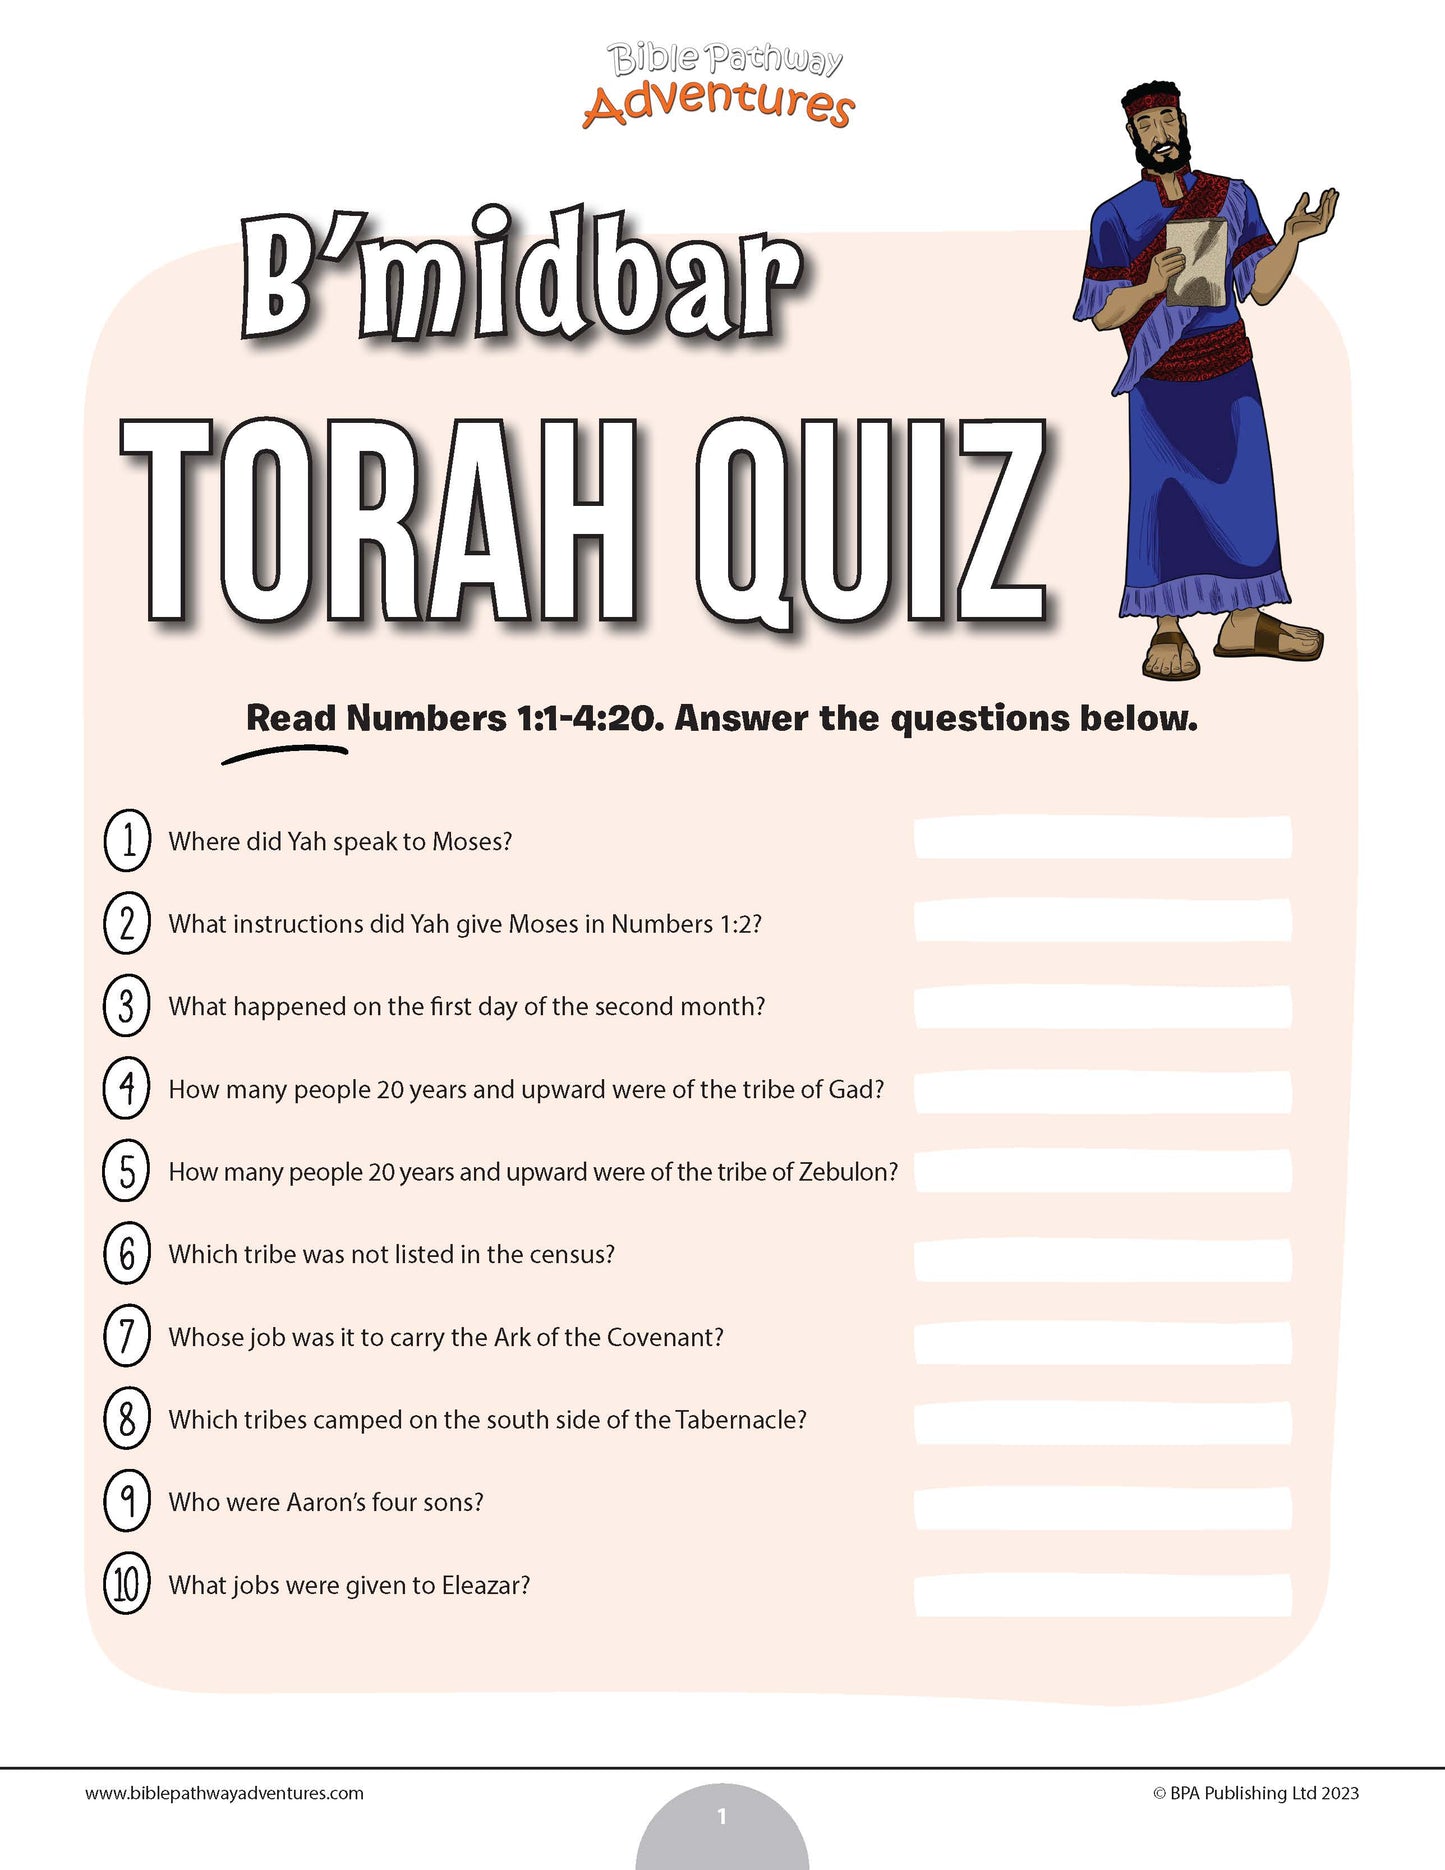 B’midbar Torah quiz (PDF)